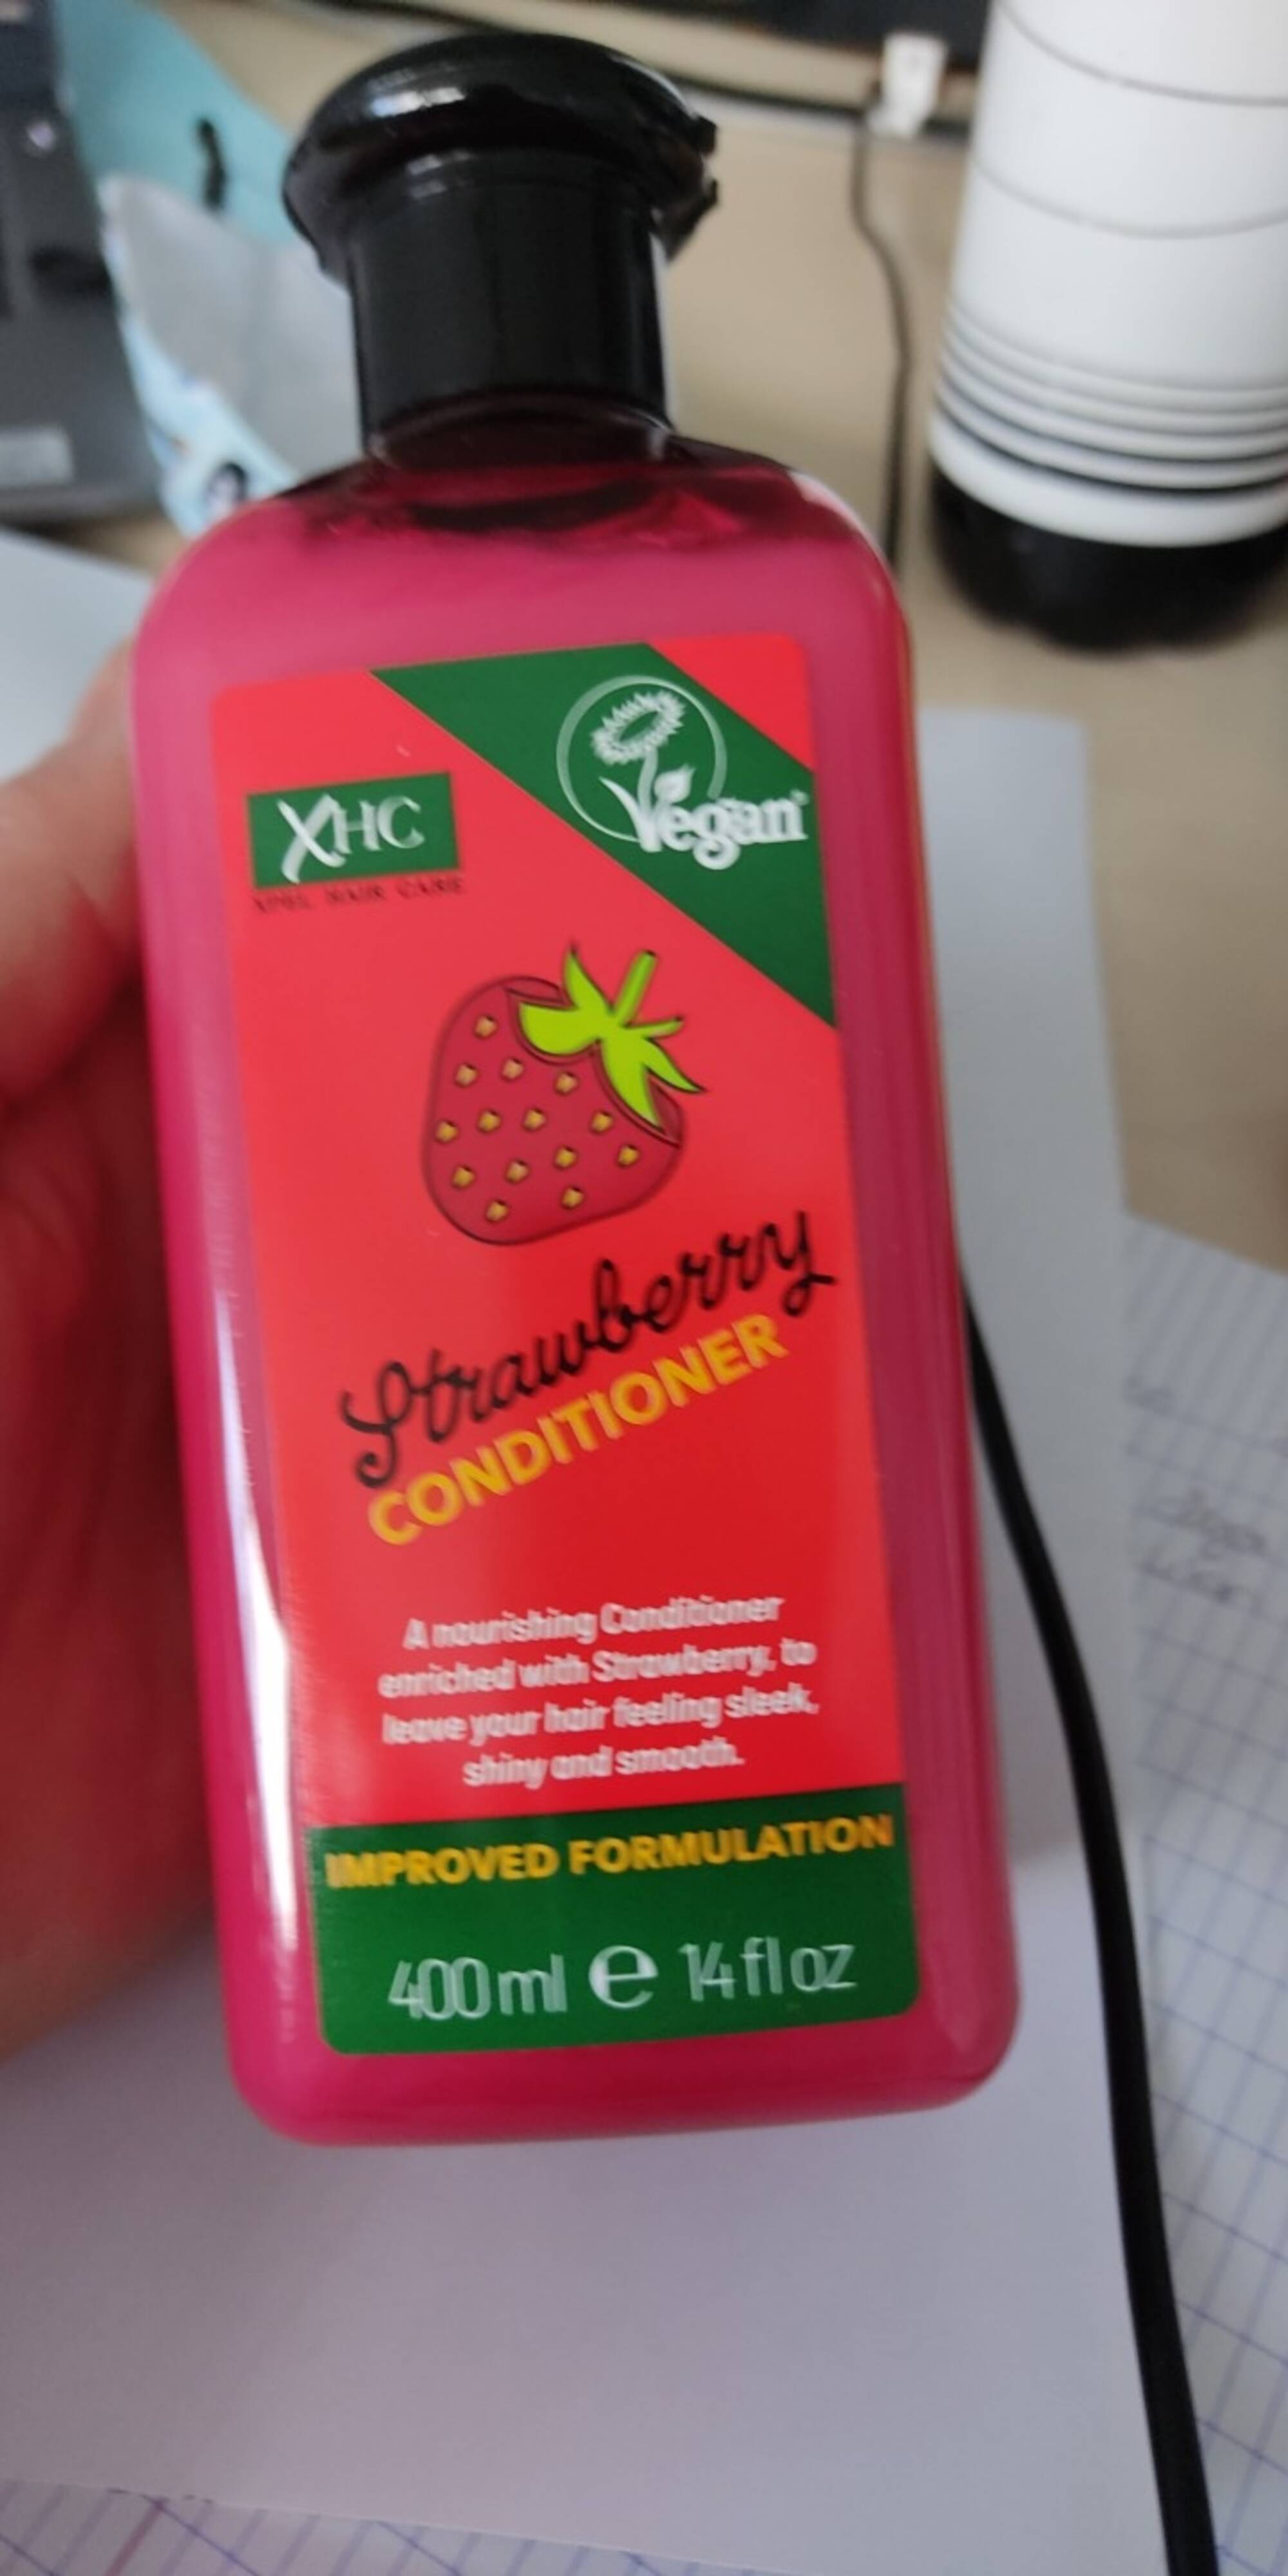 XHC - Strawberry conditioner